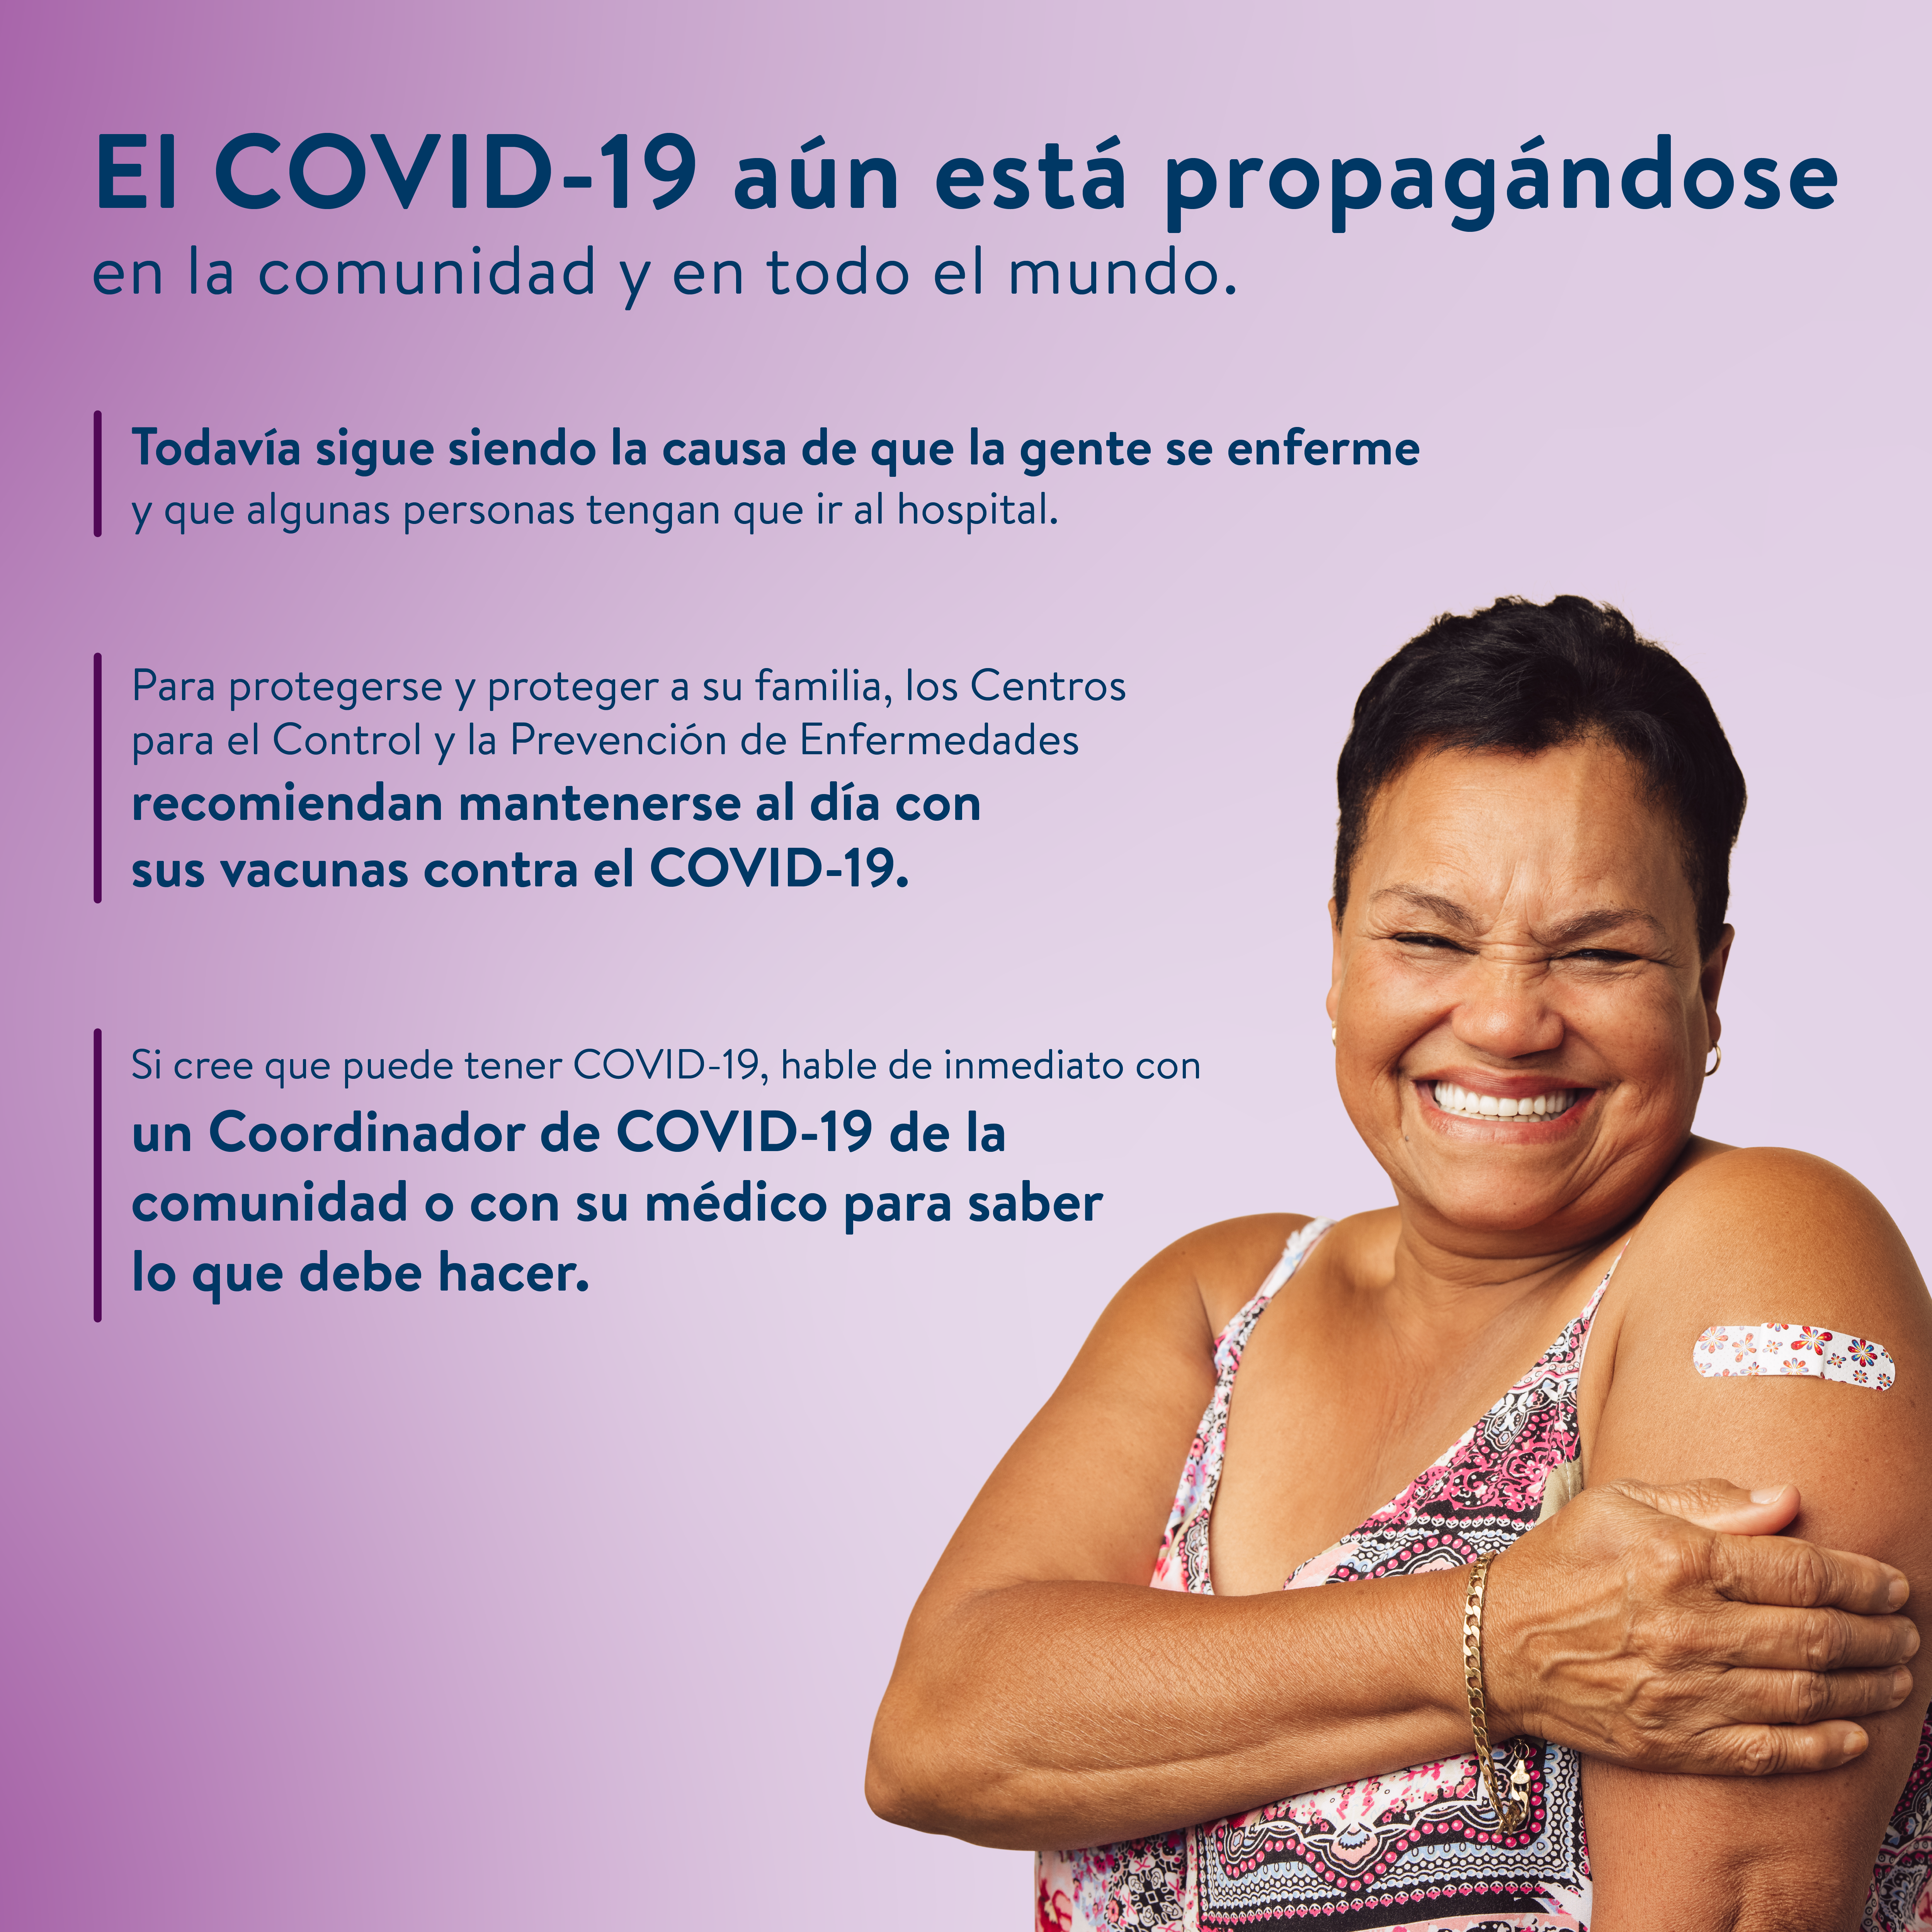 COVID-19 is still spreading in Spanish, image for social media